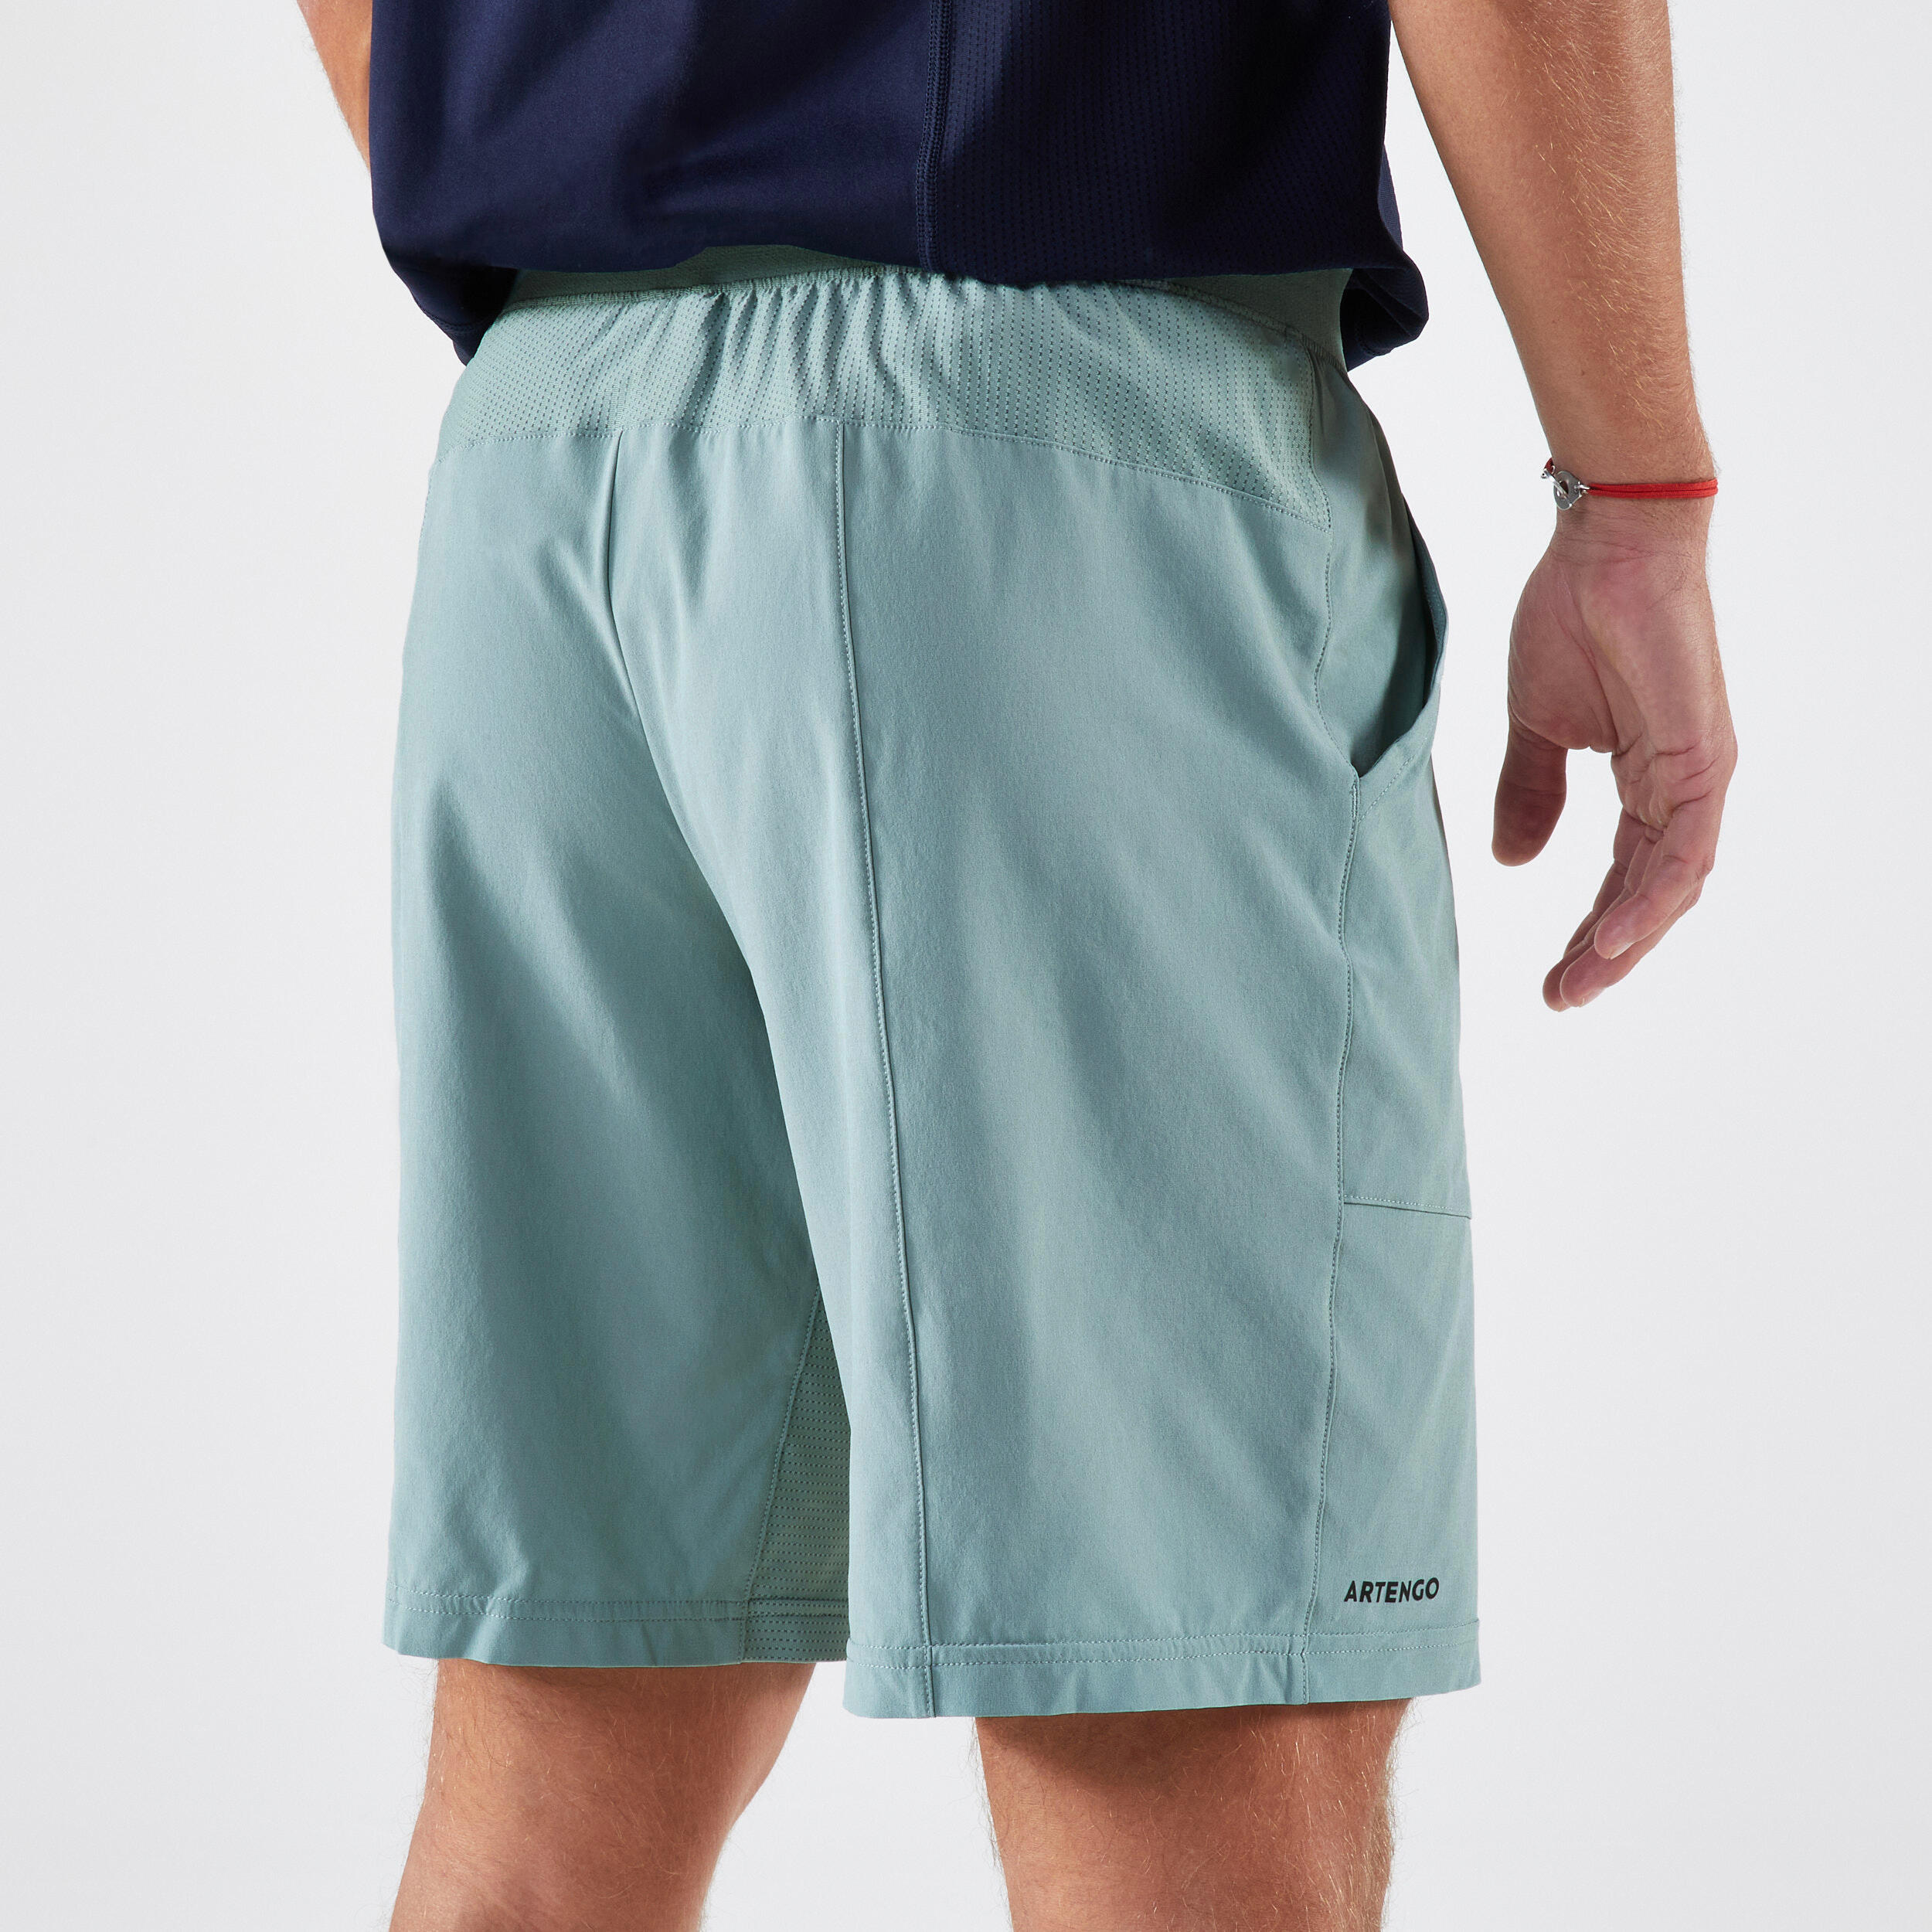 Men's Tennis Breathable Shorts Dry - Greyish Green 2/7